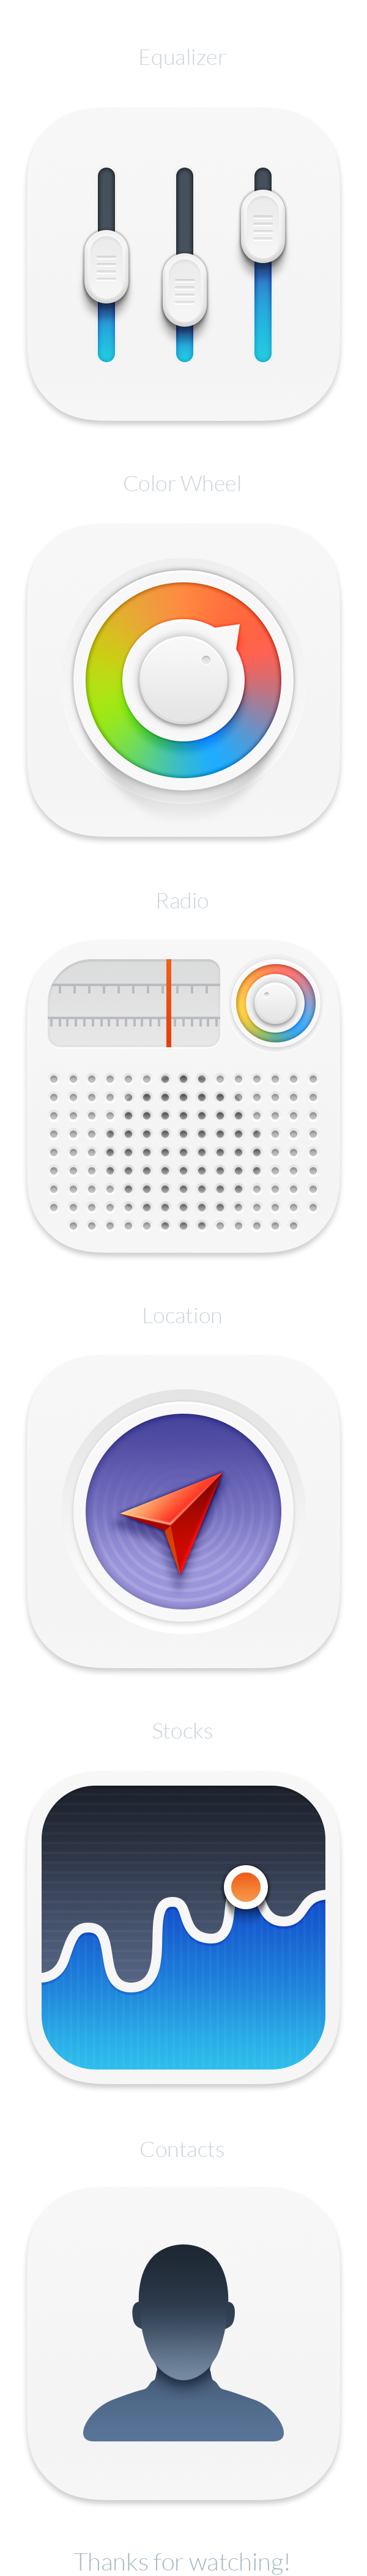 iOS 7 Minimanimal icons replacement